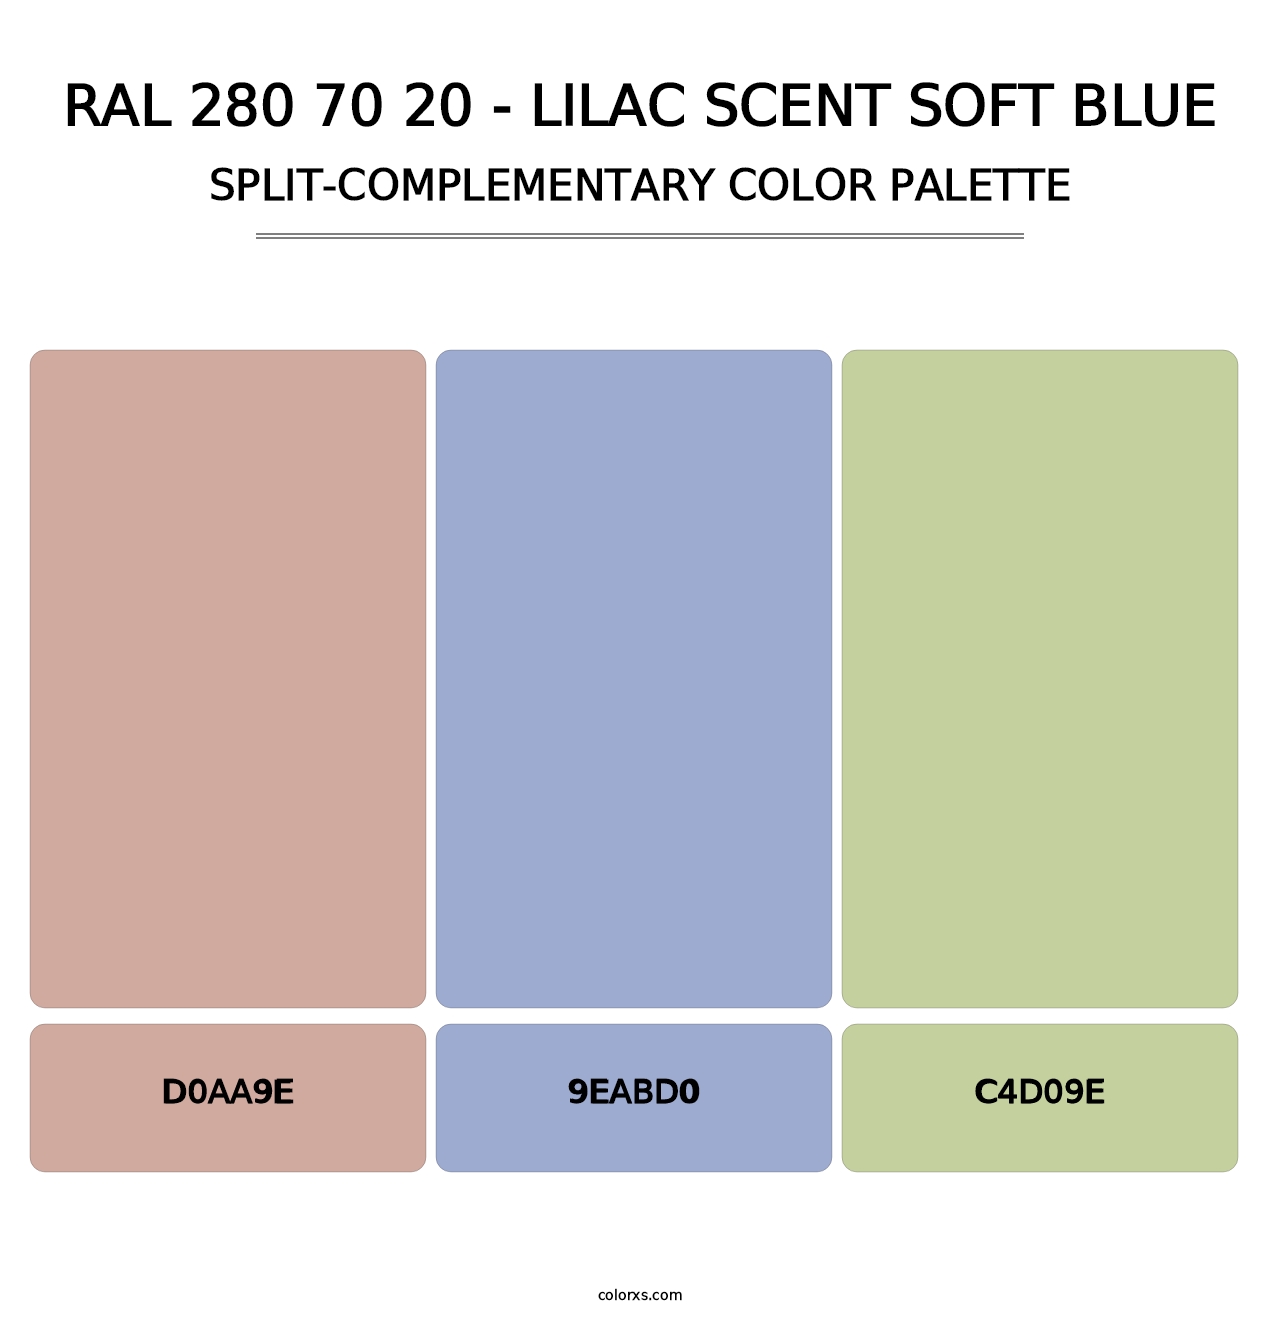 RAL 280 70 20 - Lilac Scent Soft Blue - Split-Complementary Color Palette